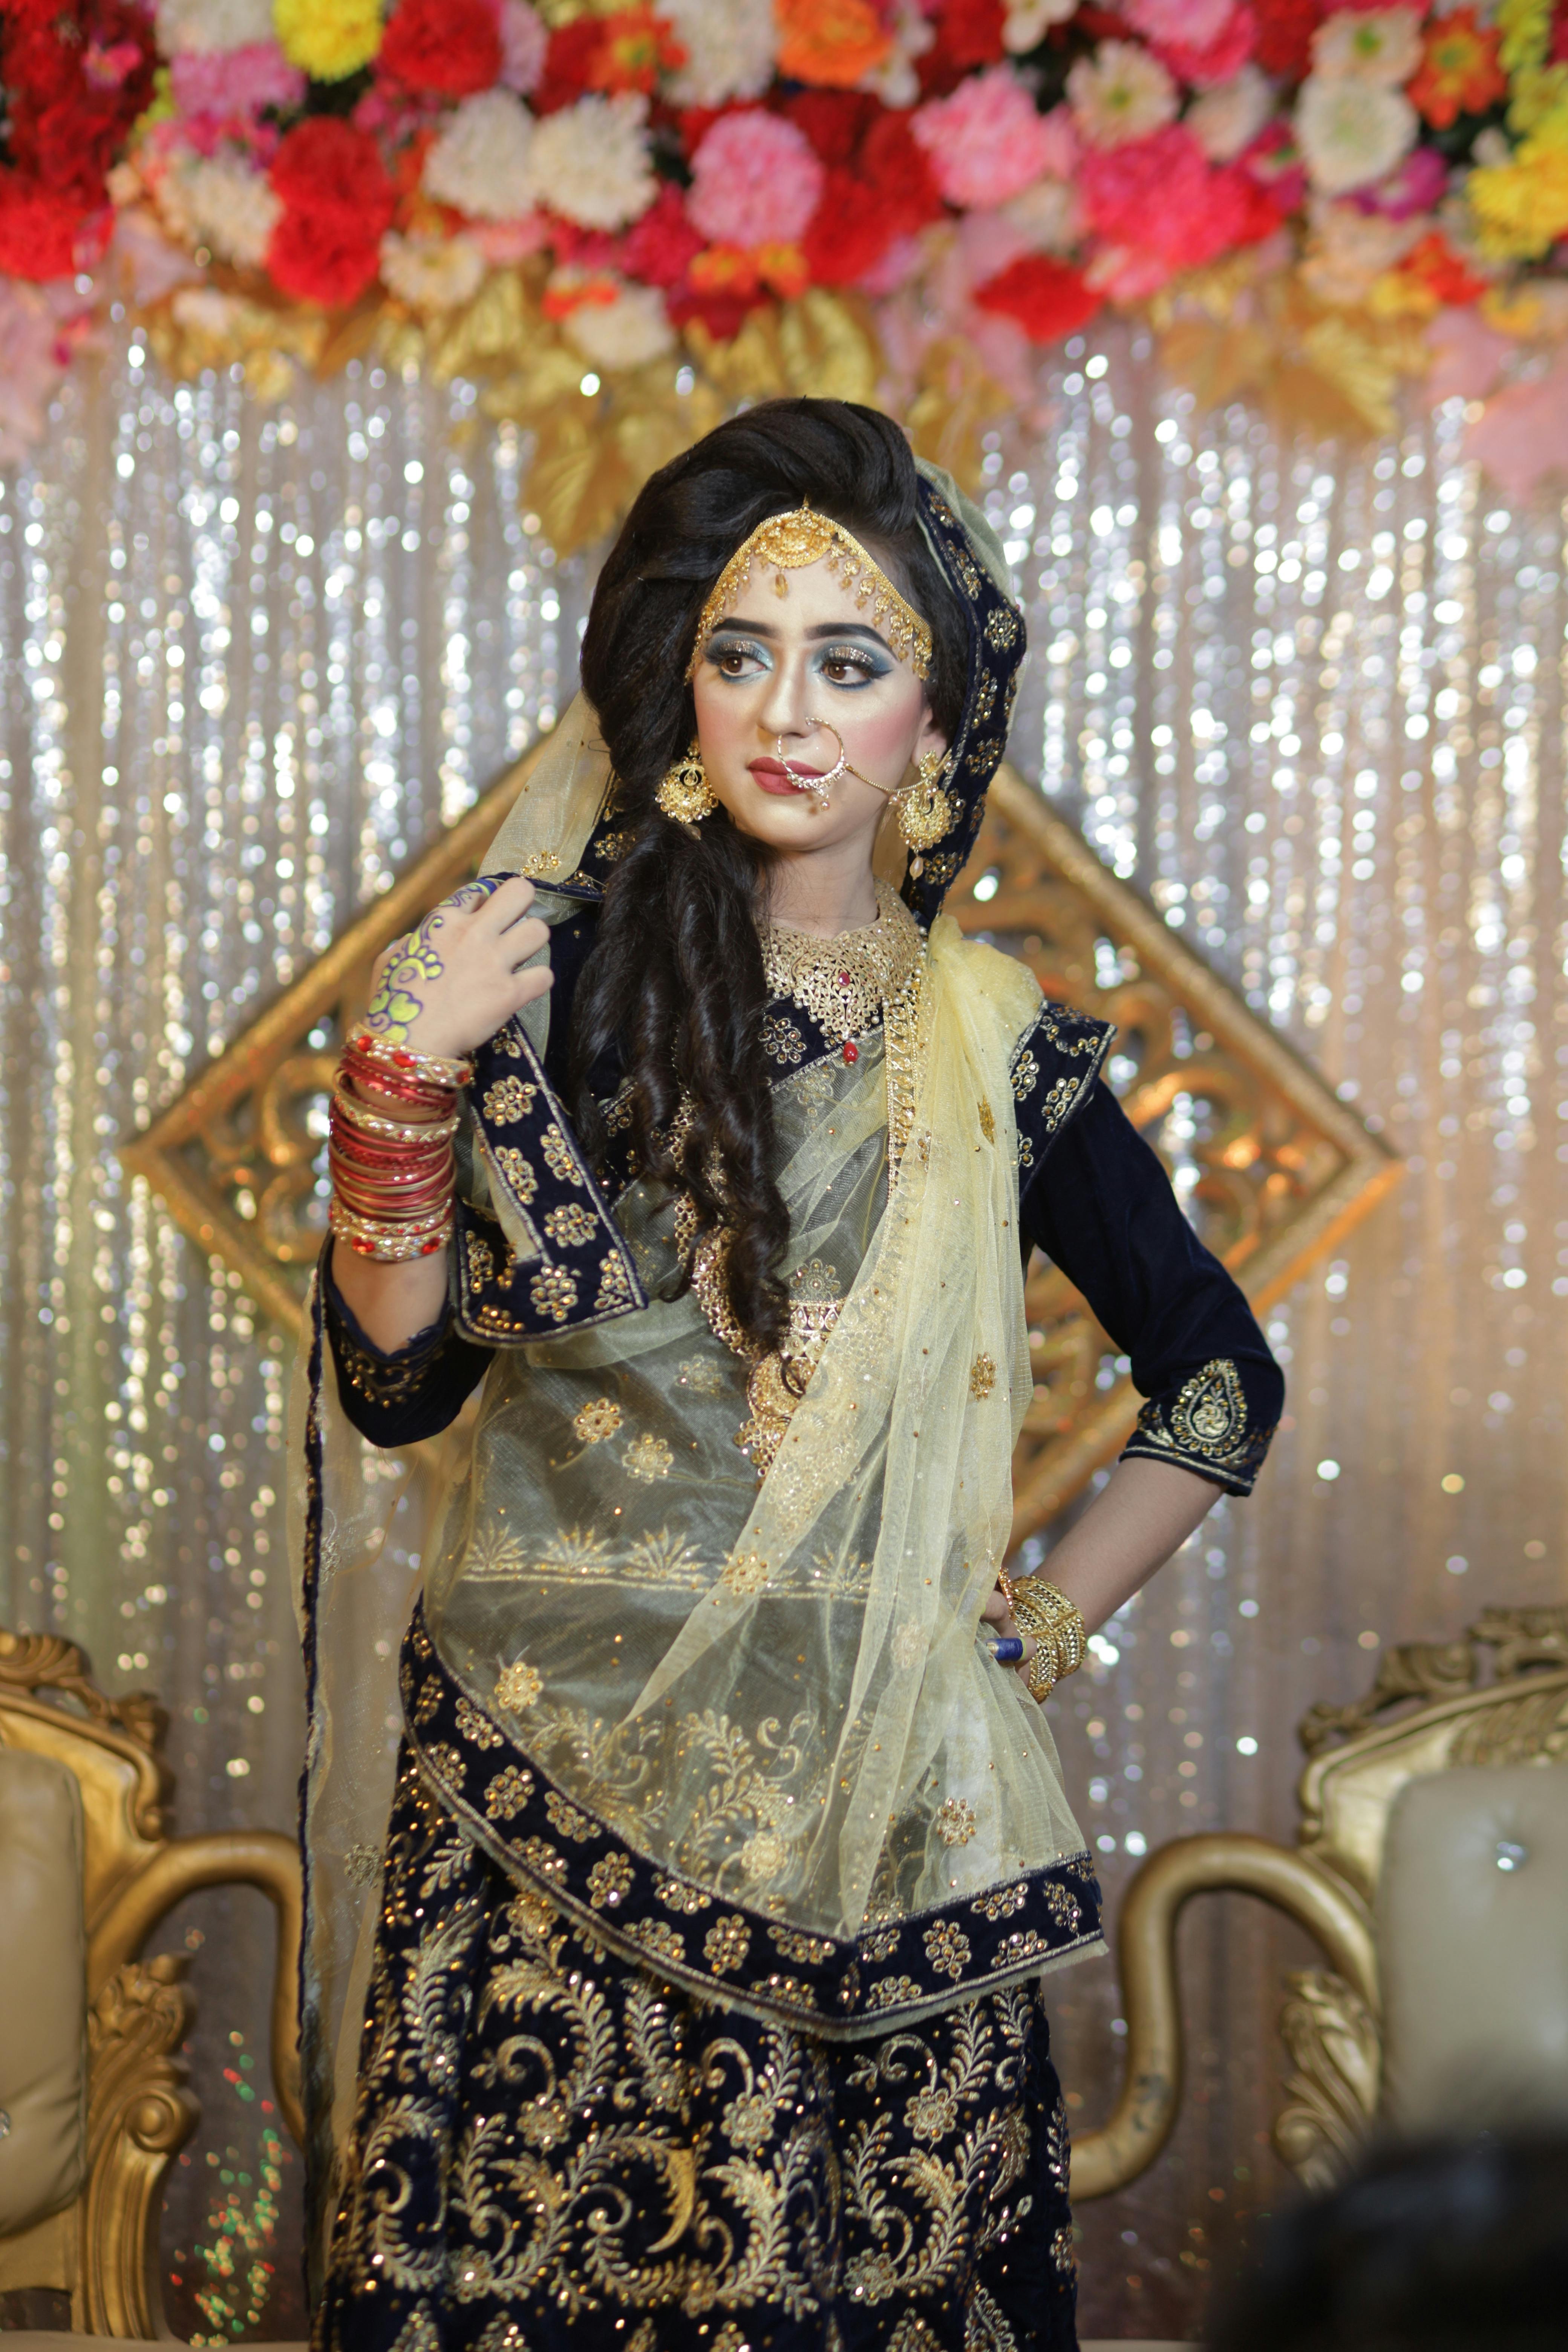 Black and Golden Ladies Designer Party Wear Lehenga Choli, 2.5m at Rs 22000  in Solan